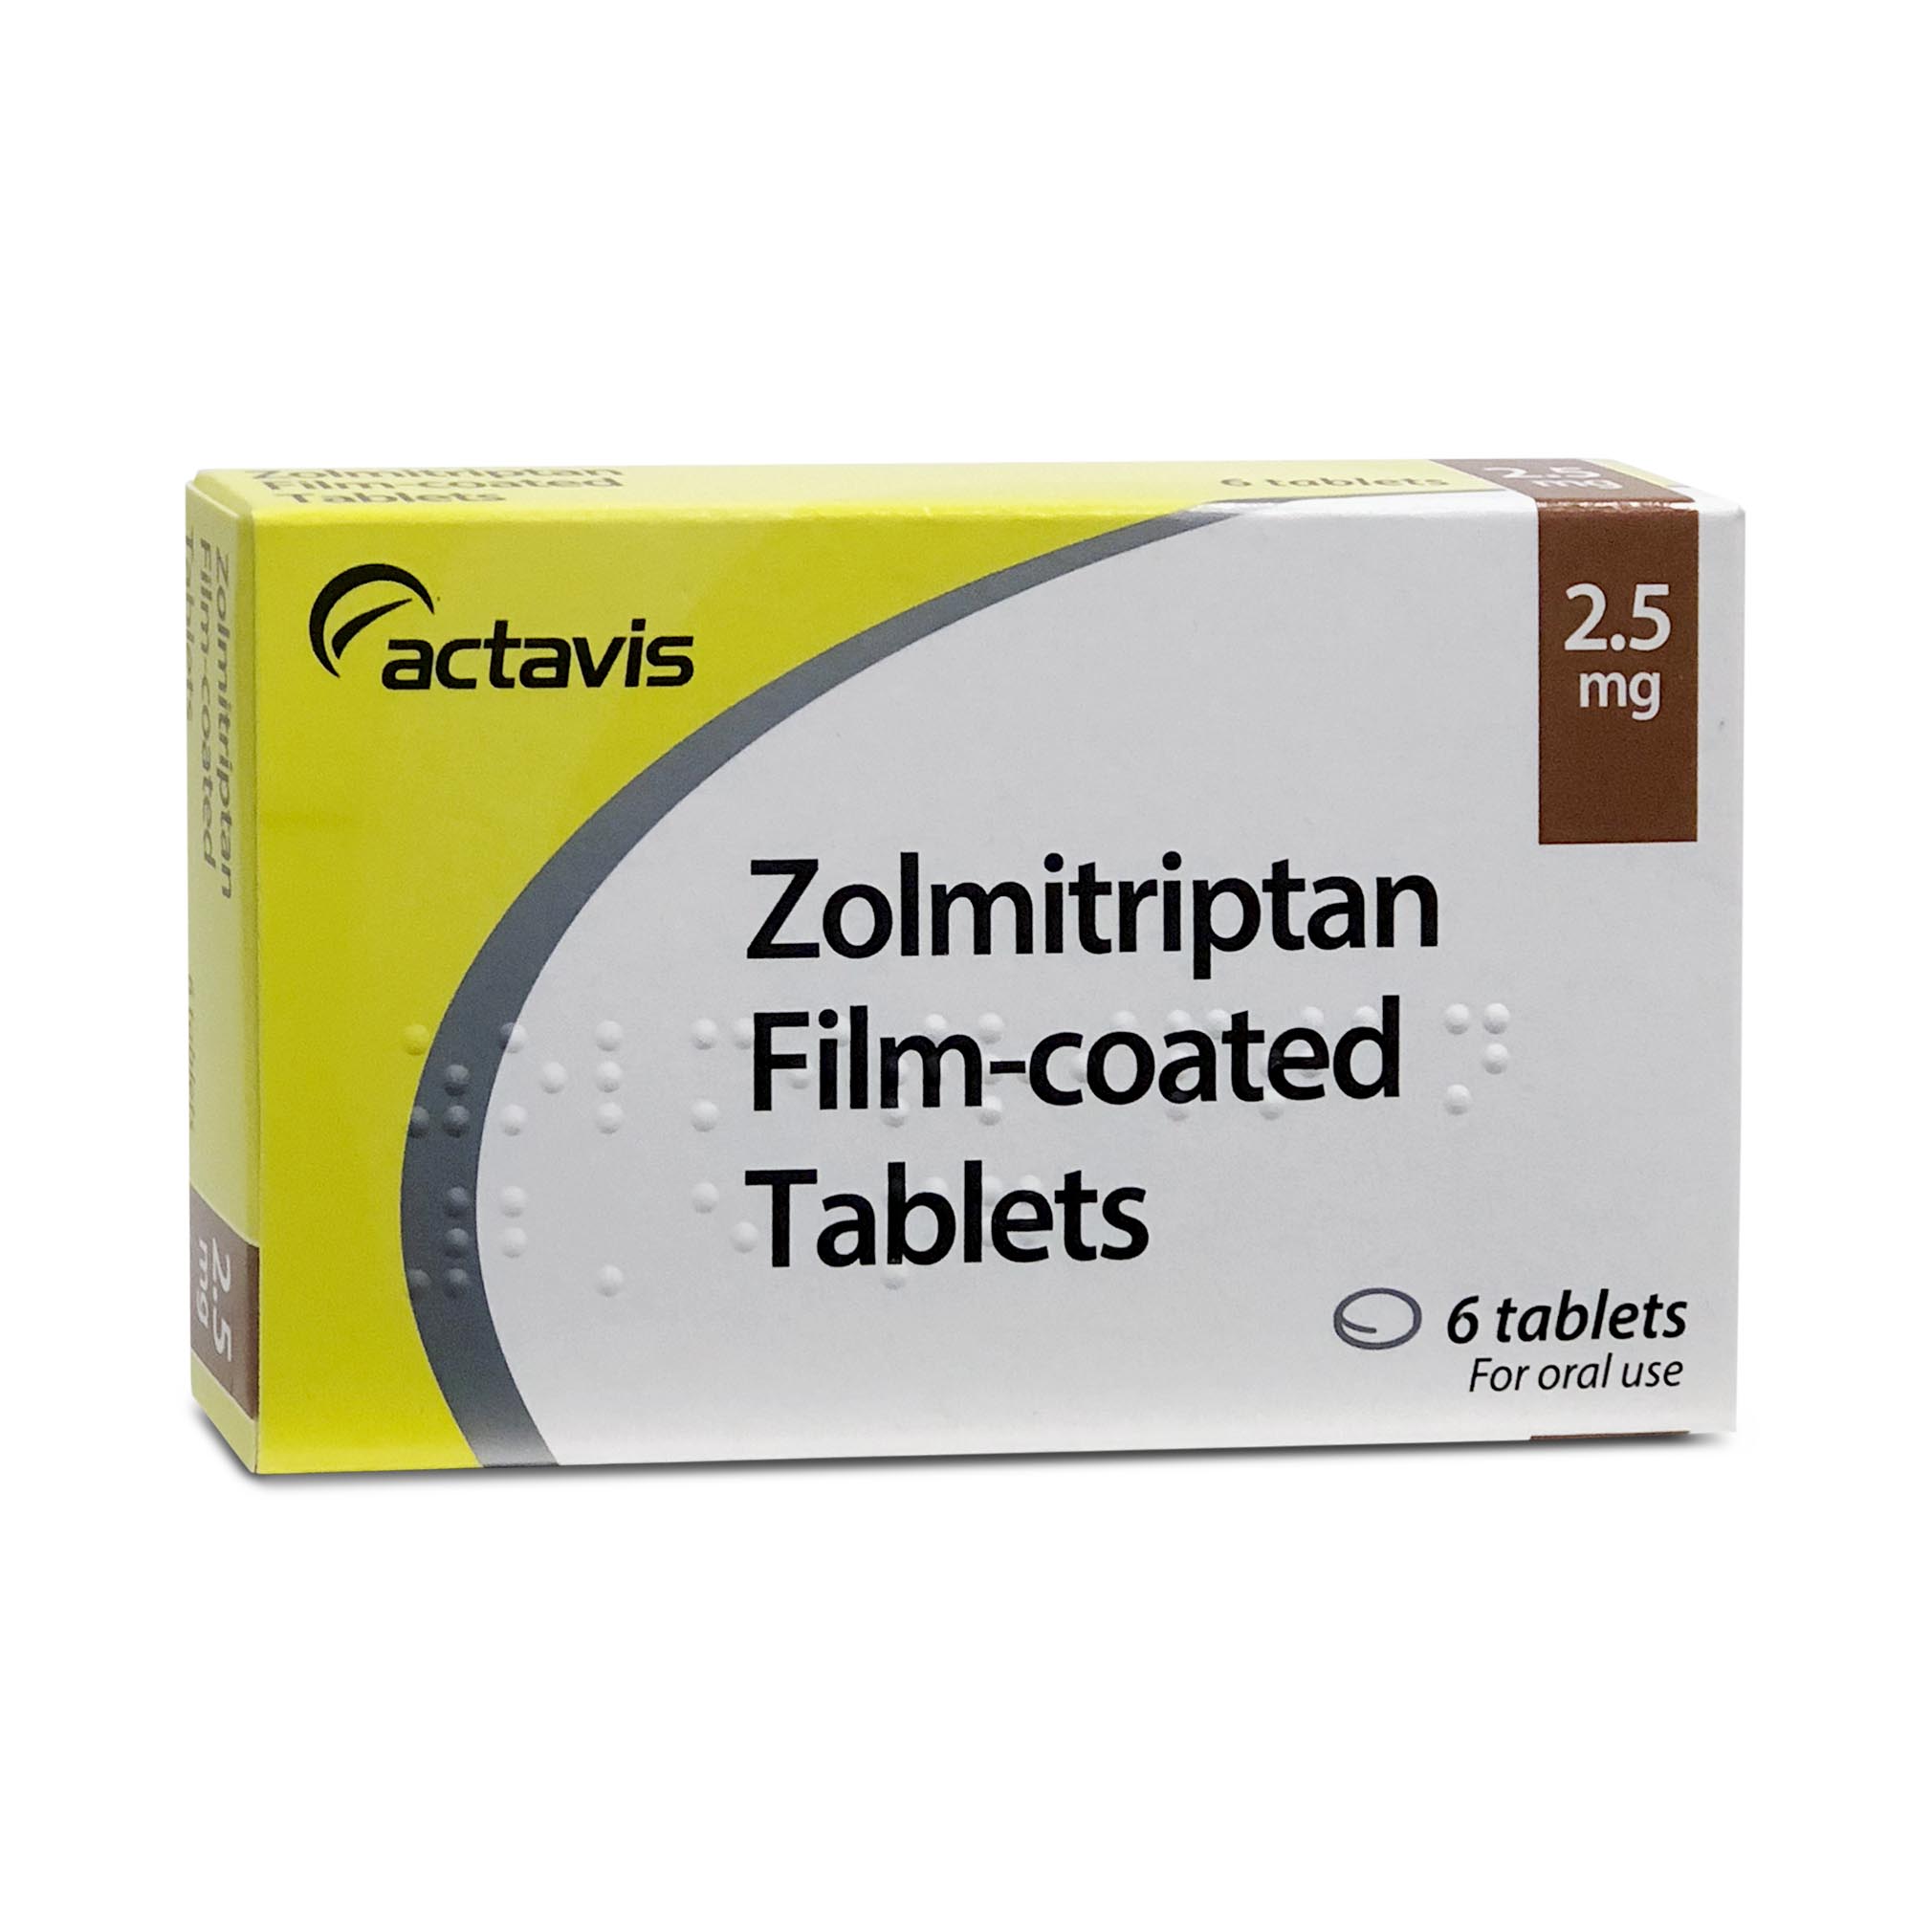 Zolmitriptan 2.5mg 6 tablets Actavis